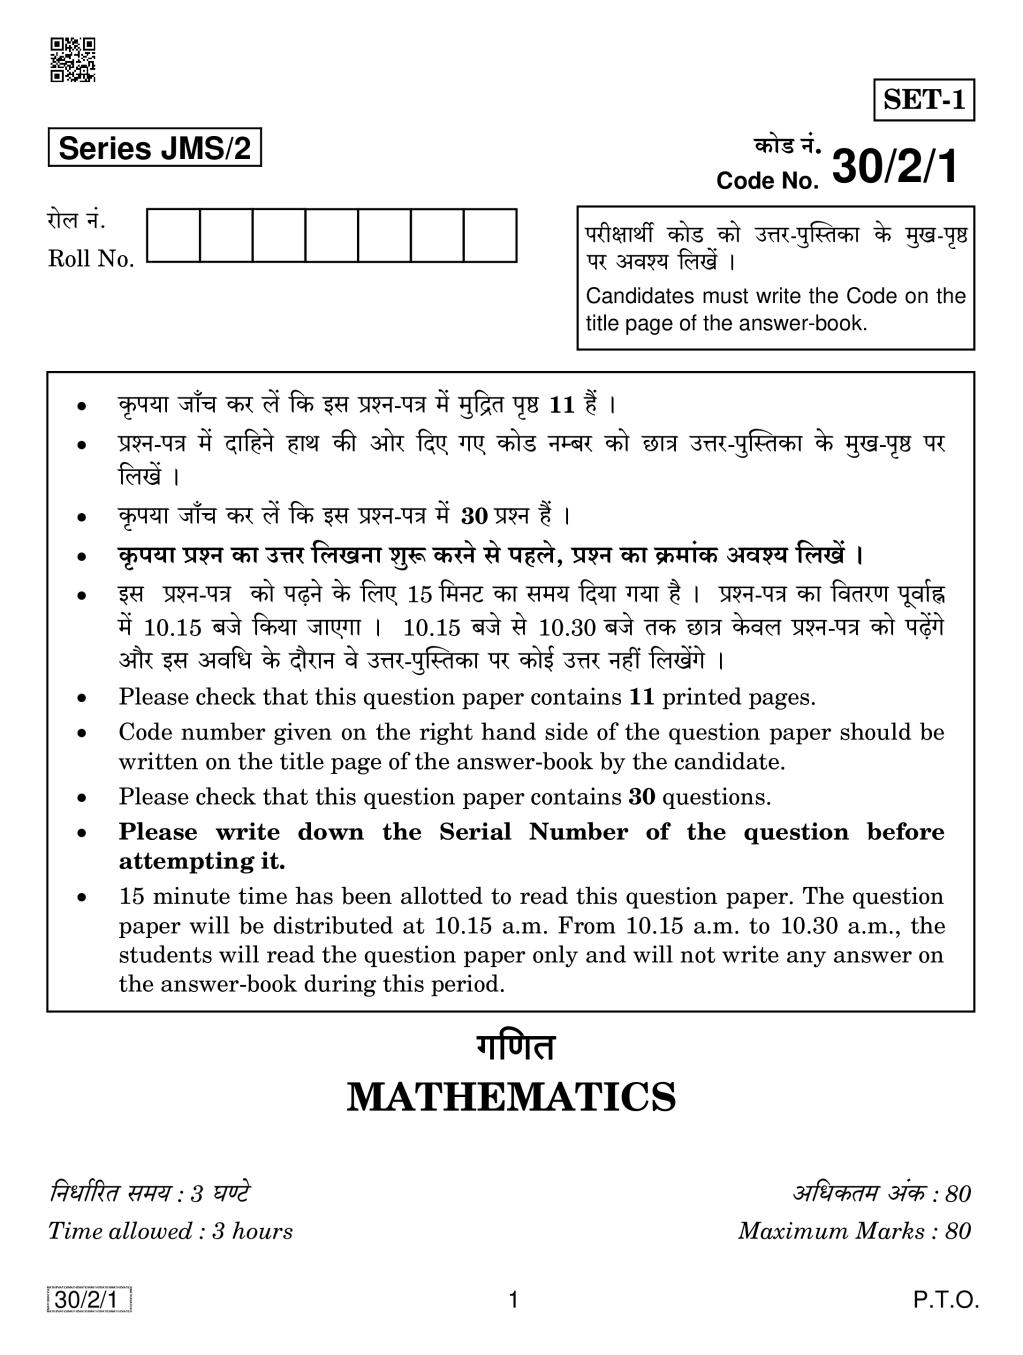 CBSE Class 10 Mathematics Question Paper 2019 Set 2 - Page 1